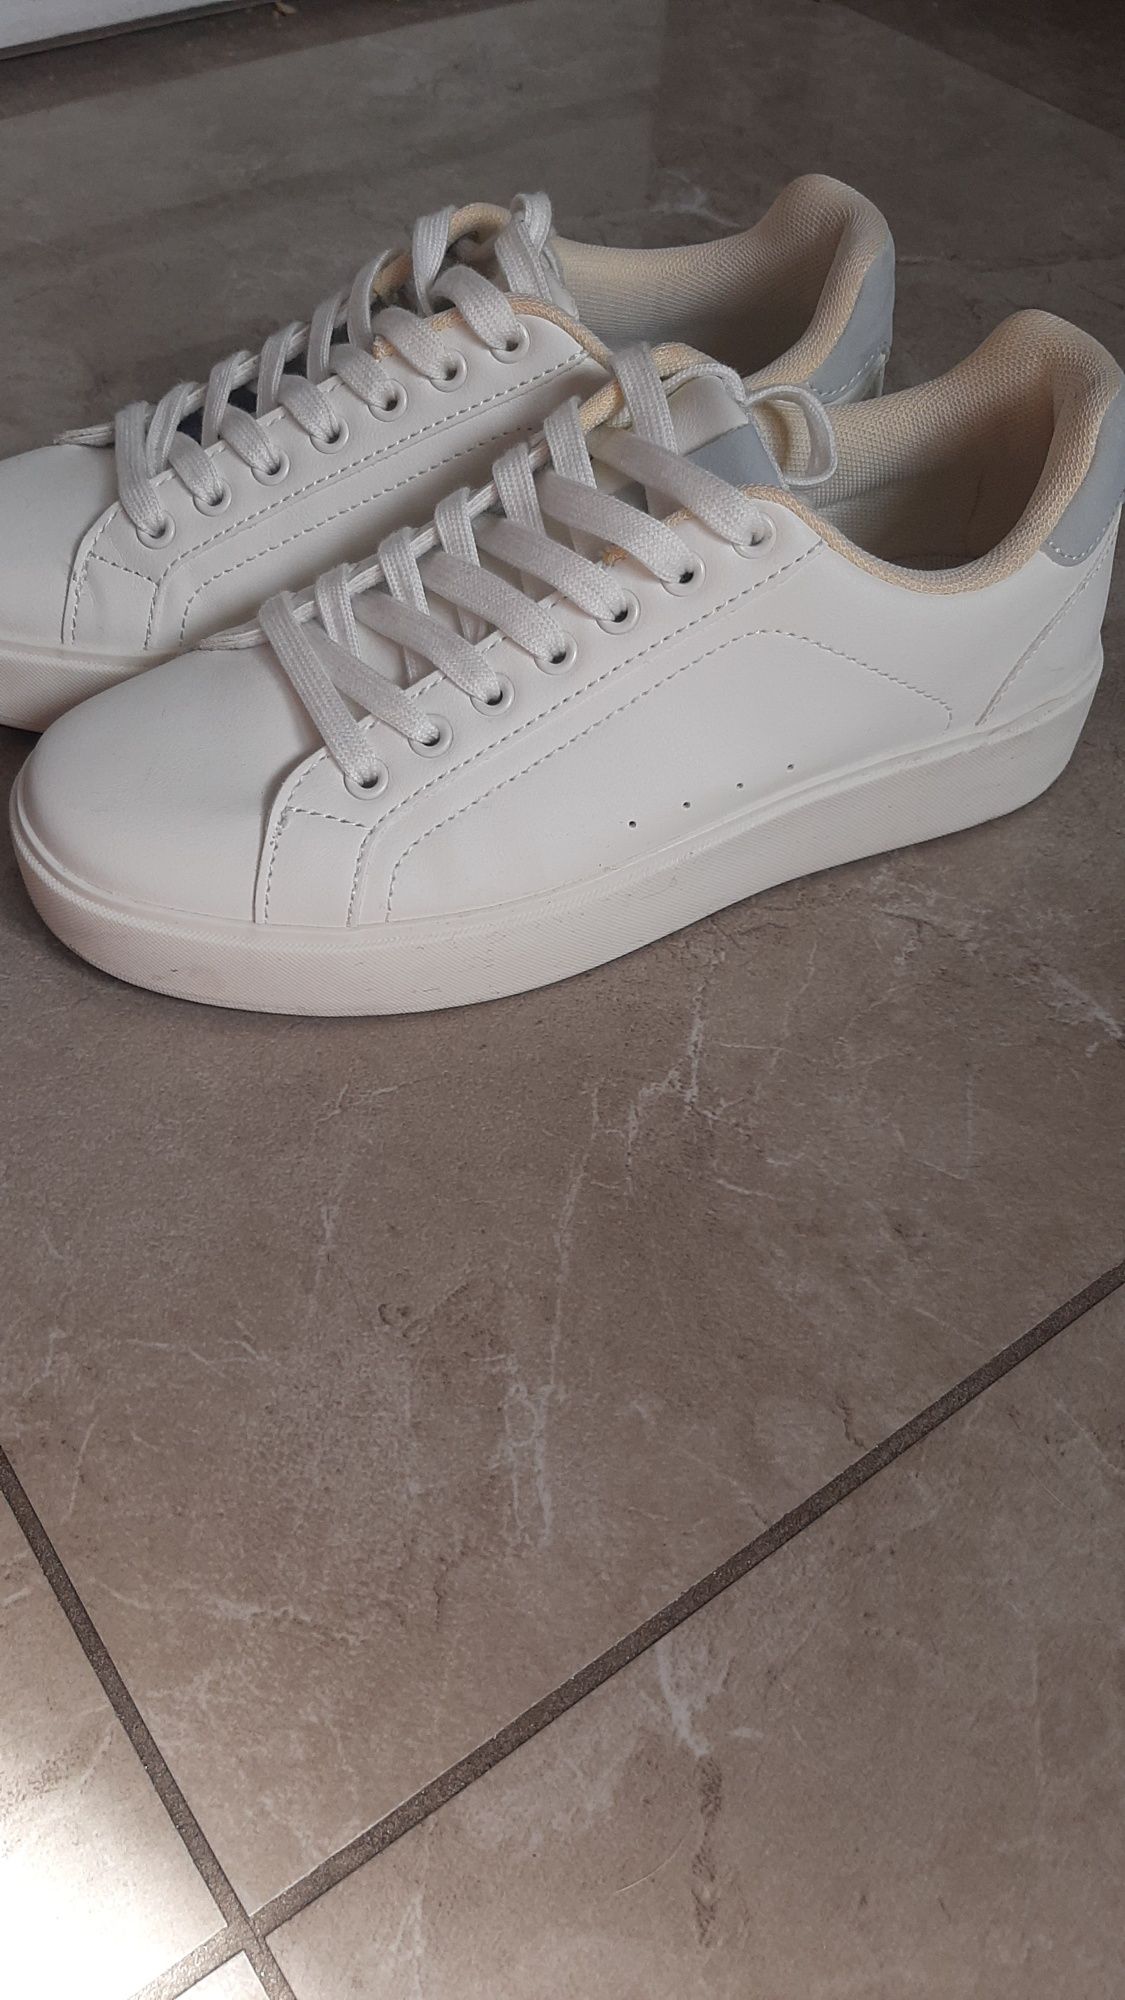 Białe sneakersy,  nowe, marki Pullandbear, rozm. 37